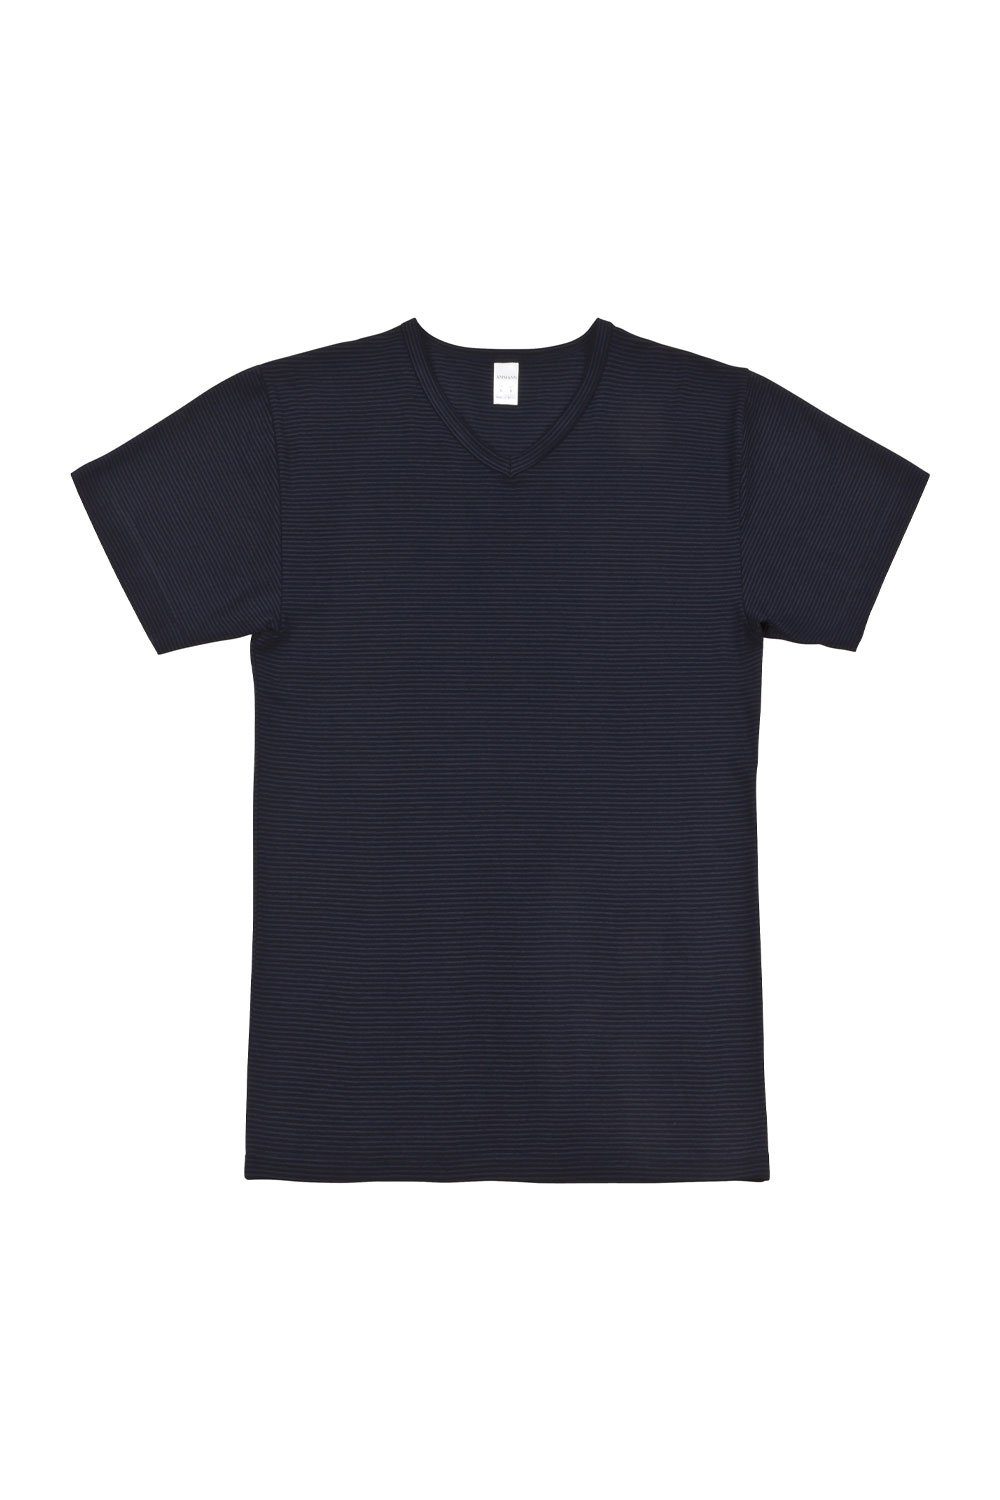 Ammann T-Shirt V-Shirt 700257 nightblue